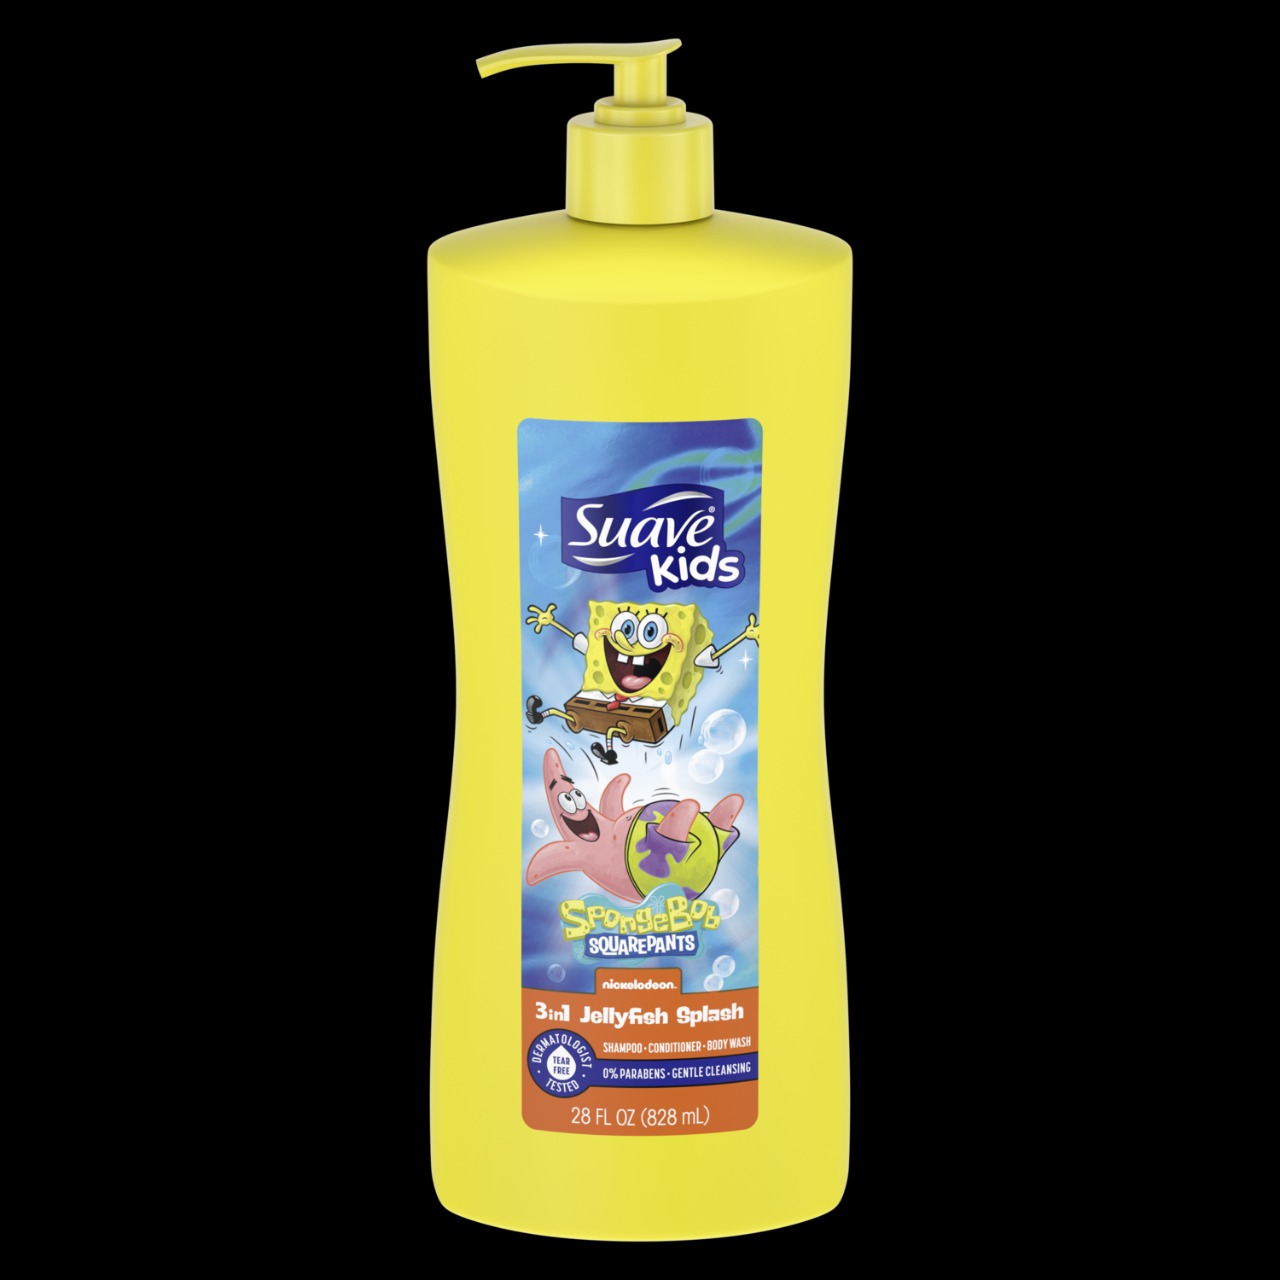 Suave Kids Sponge Bob 2in1 Sham Body Wash 828ml